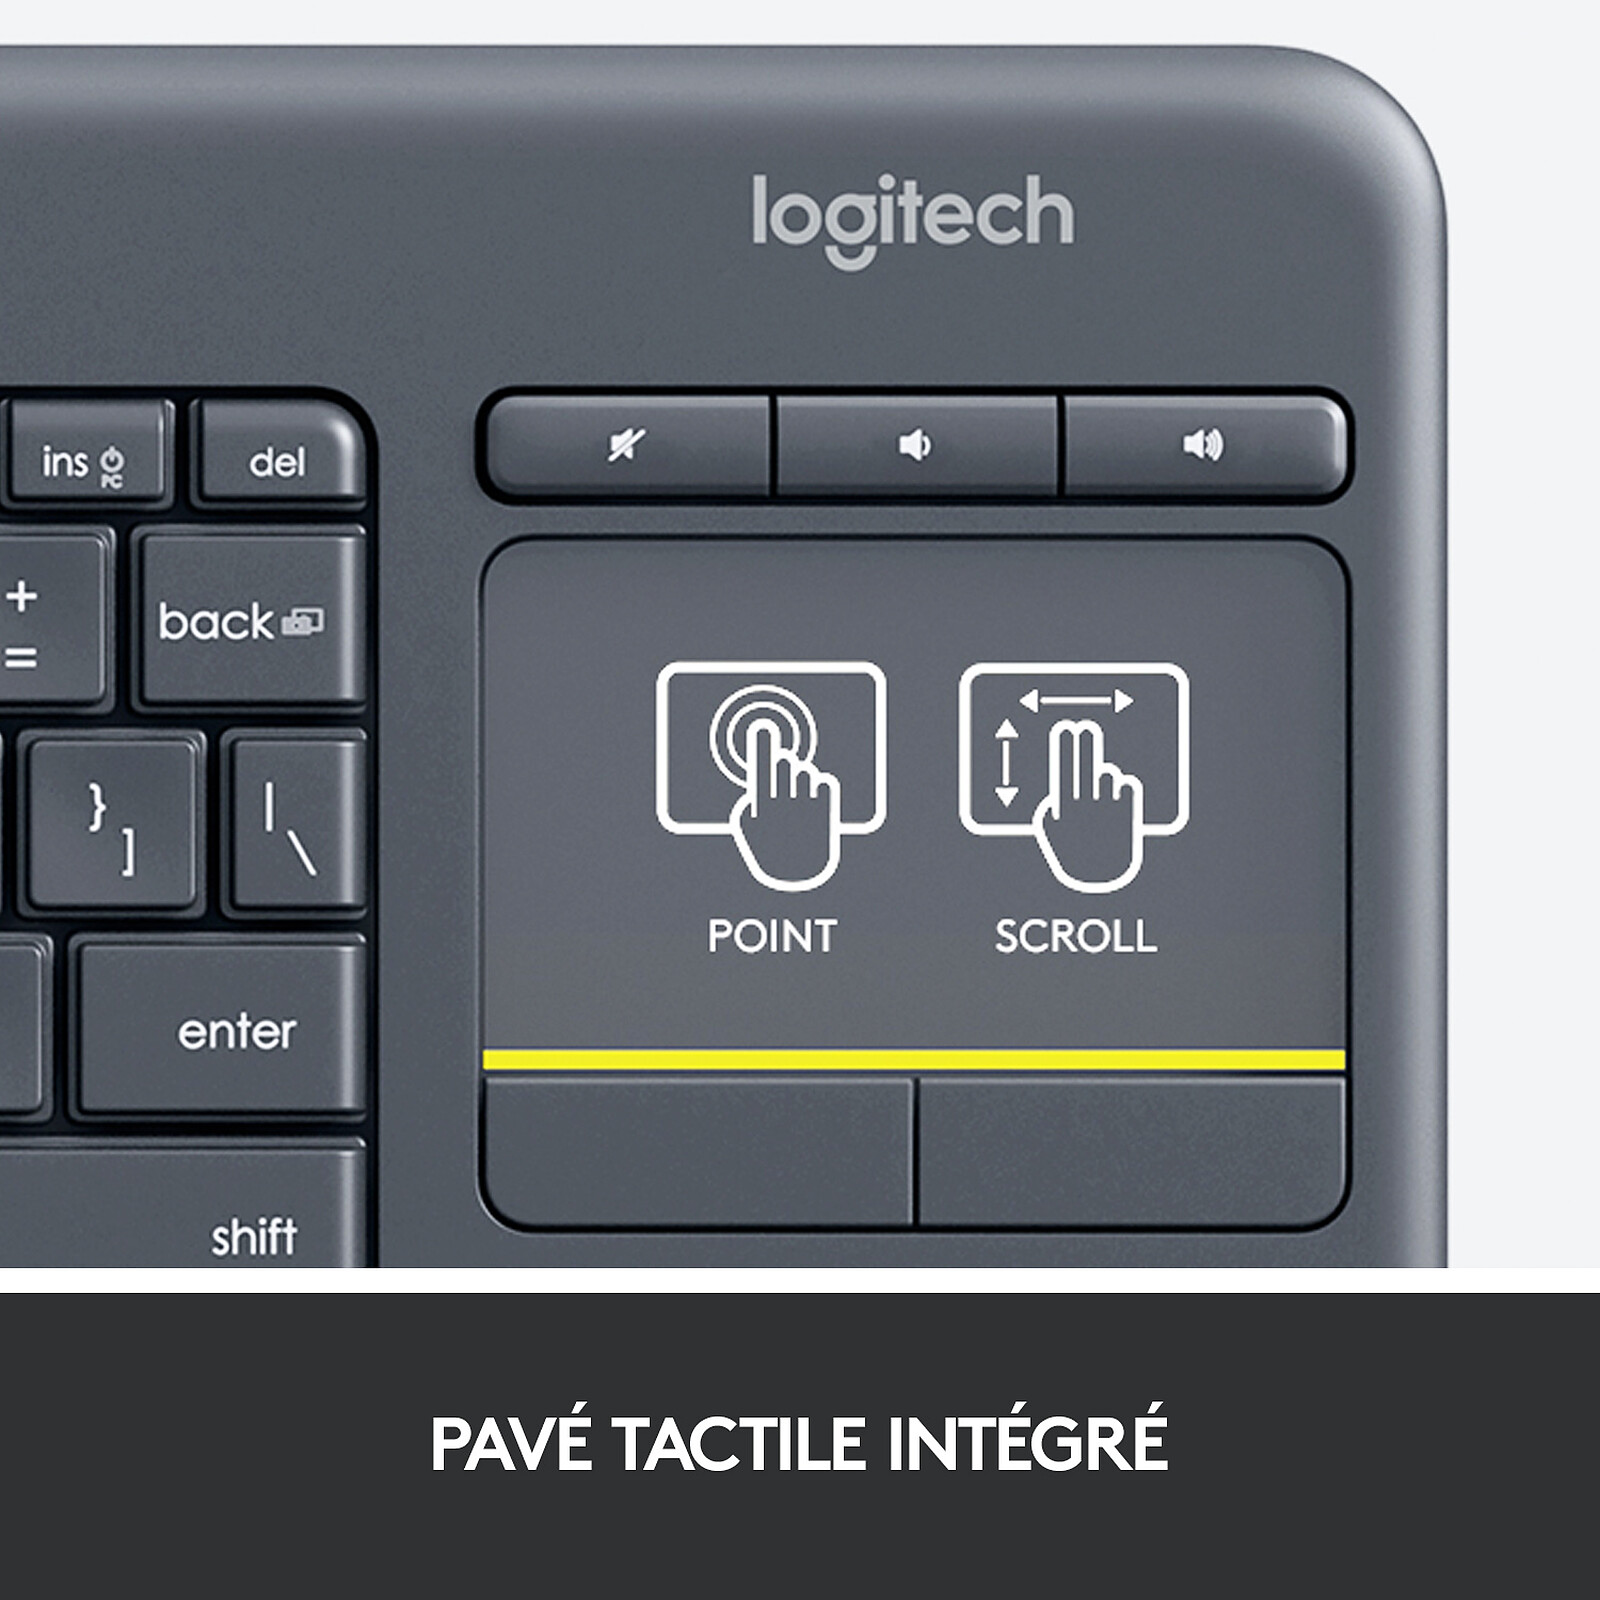 Wireless Touch Plus (Black) - Keyboard Logitech on LDLC